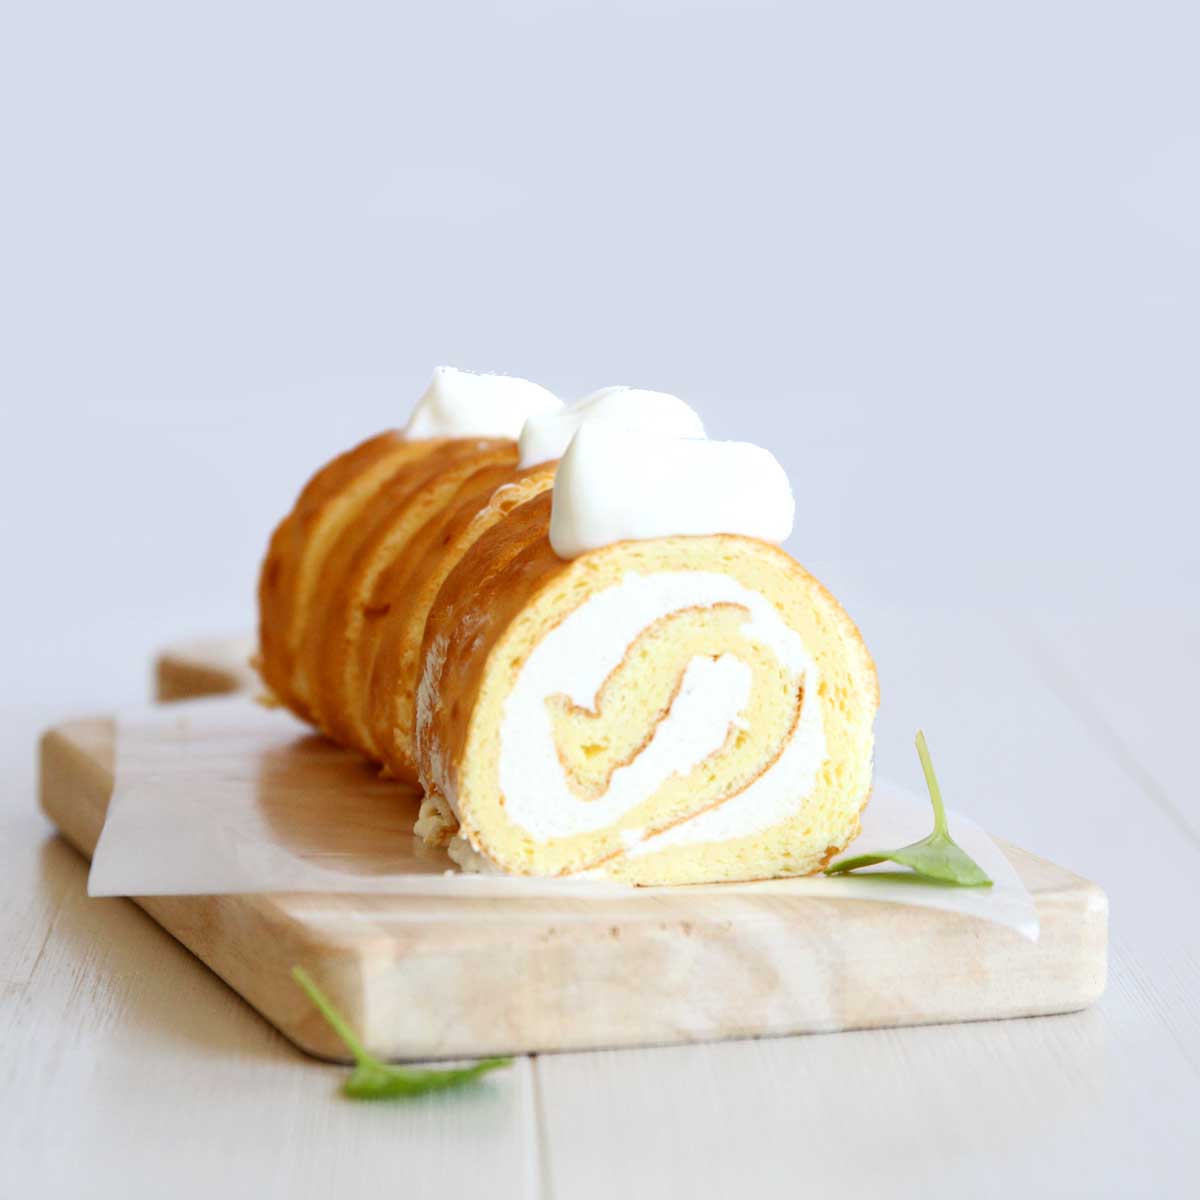 Tangy & Sweet! Greek Yogurt Swiss Roll Cake (Low Carb, Gluten-Free) - Sweet Matcha Whipped Cream